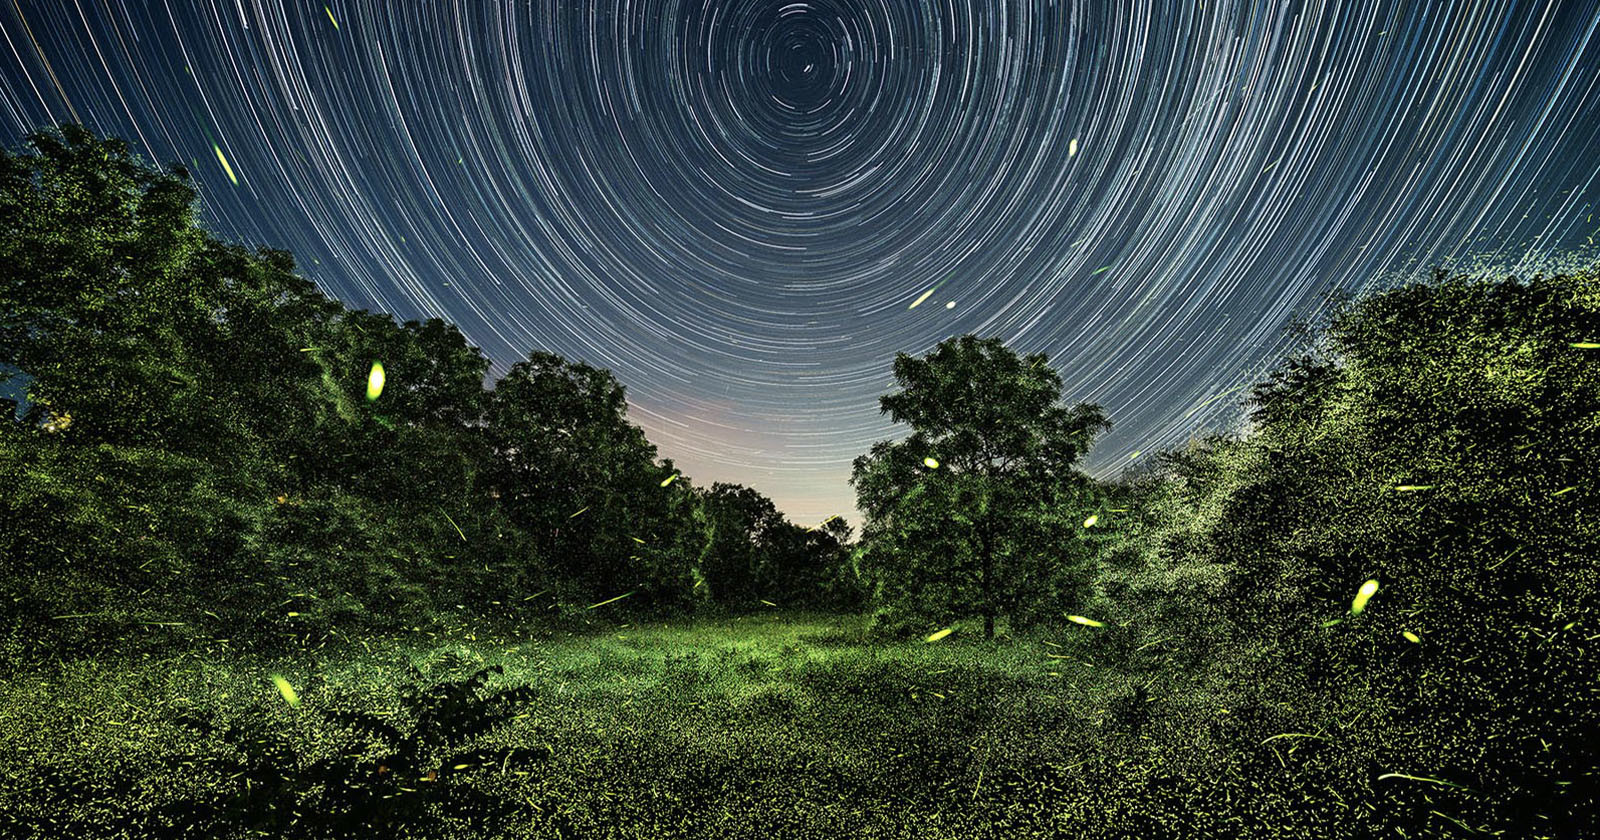  magical photos shed light how fireflies interact 